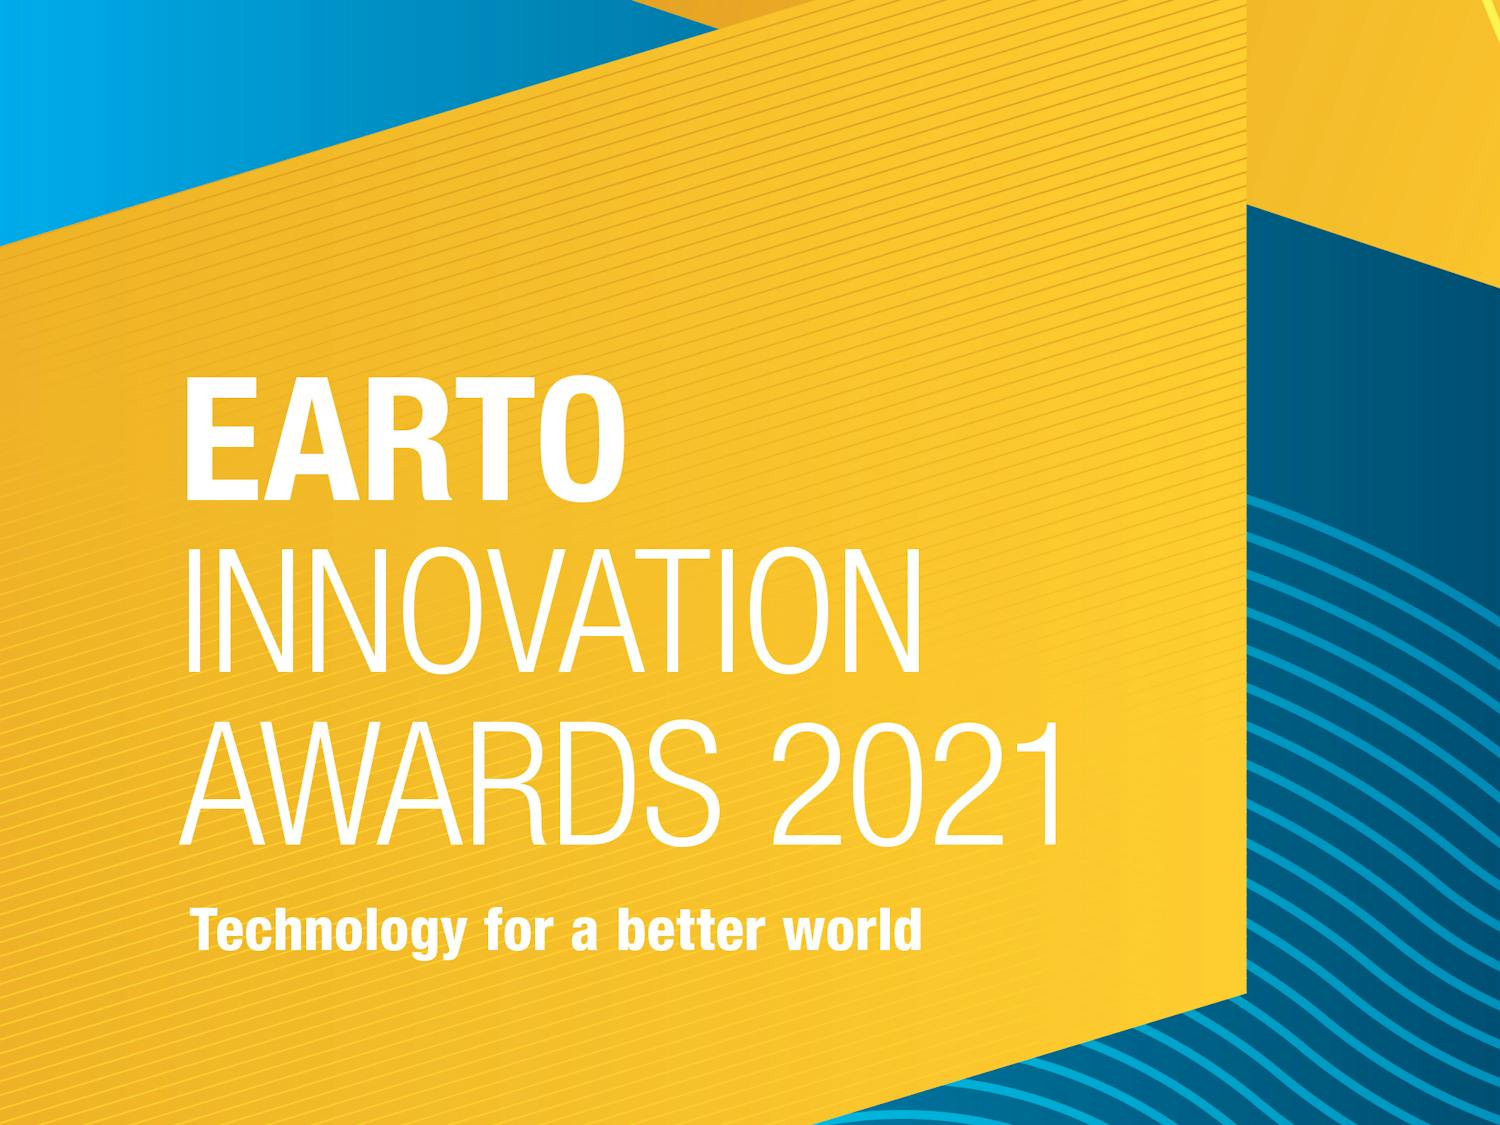 Banner of EARTO innovation awards 2021 